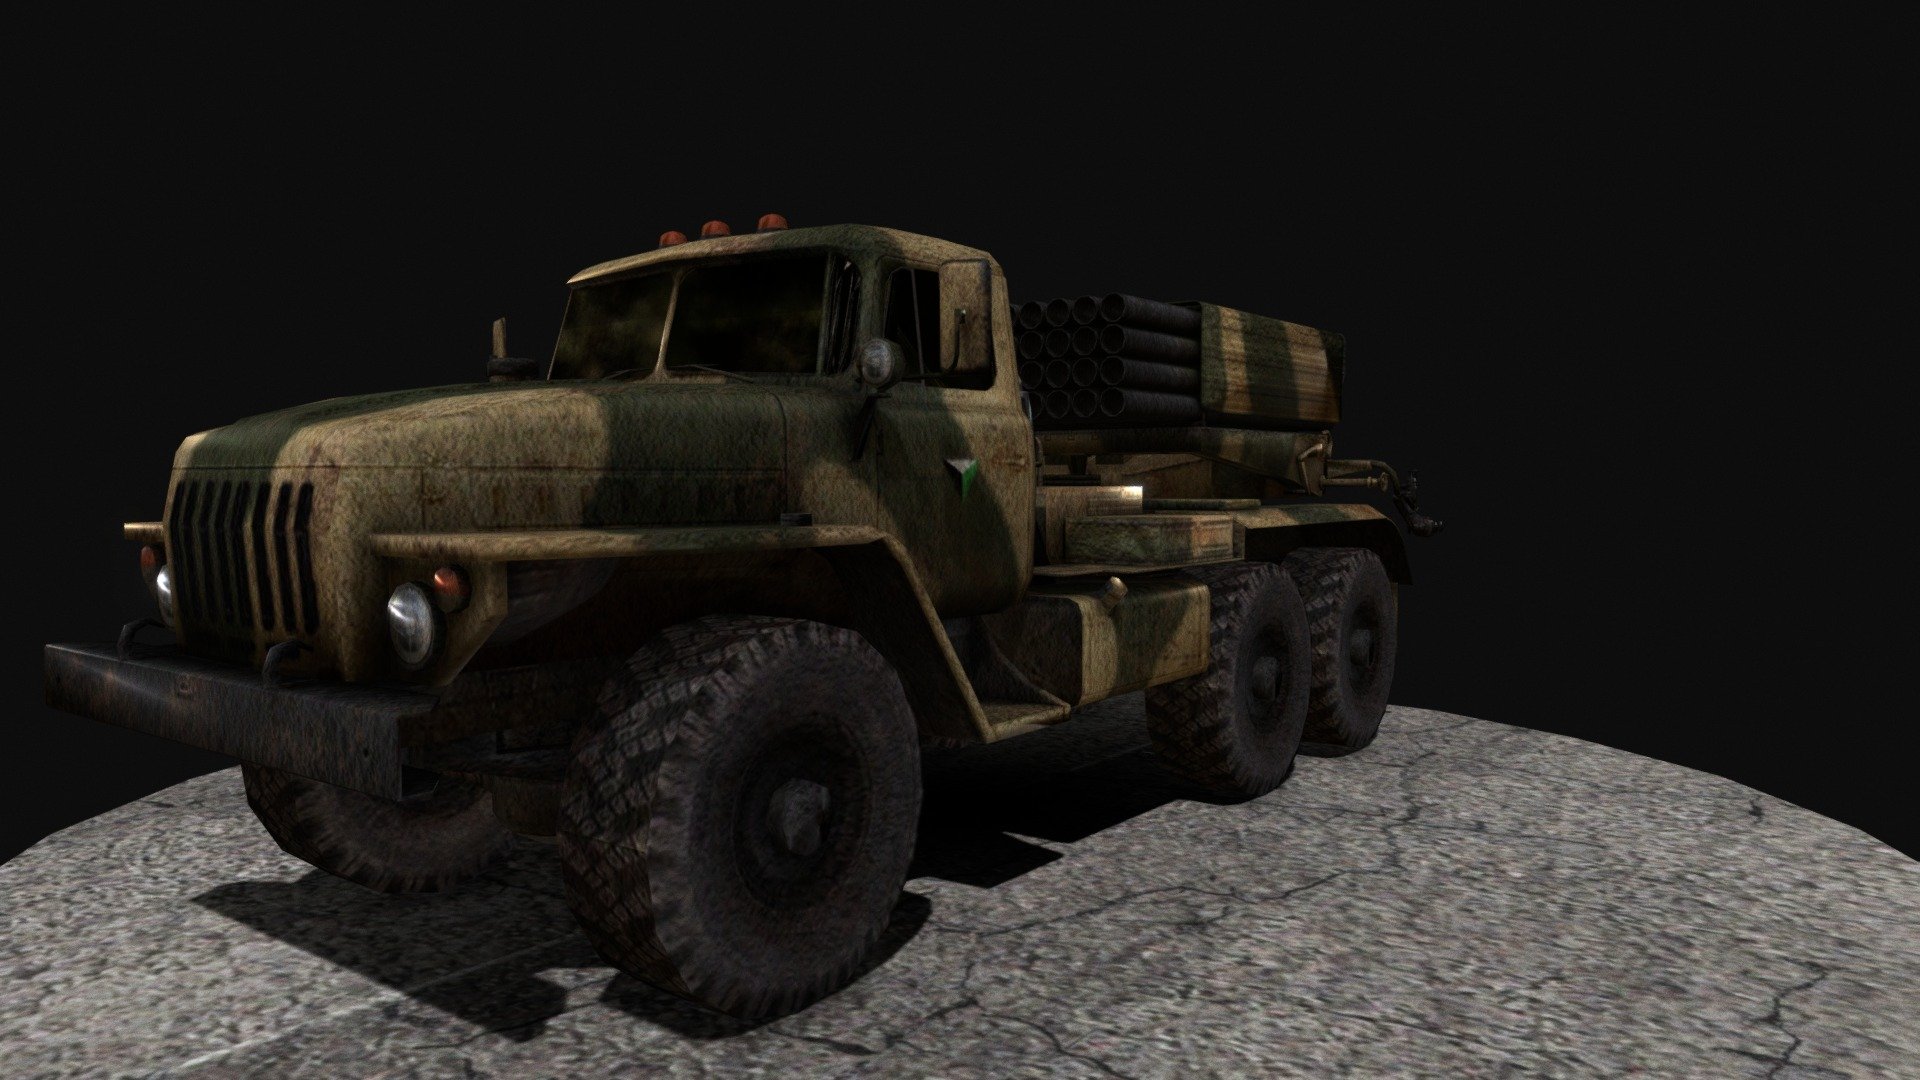 BM-21 GRAD (LOW POLY) - Download Free 3D model by lm9241221 3d model